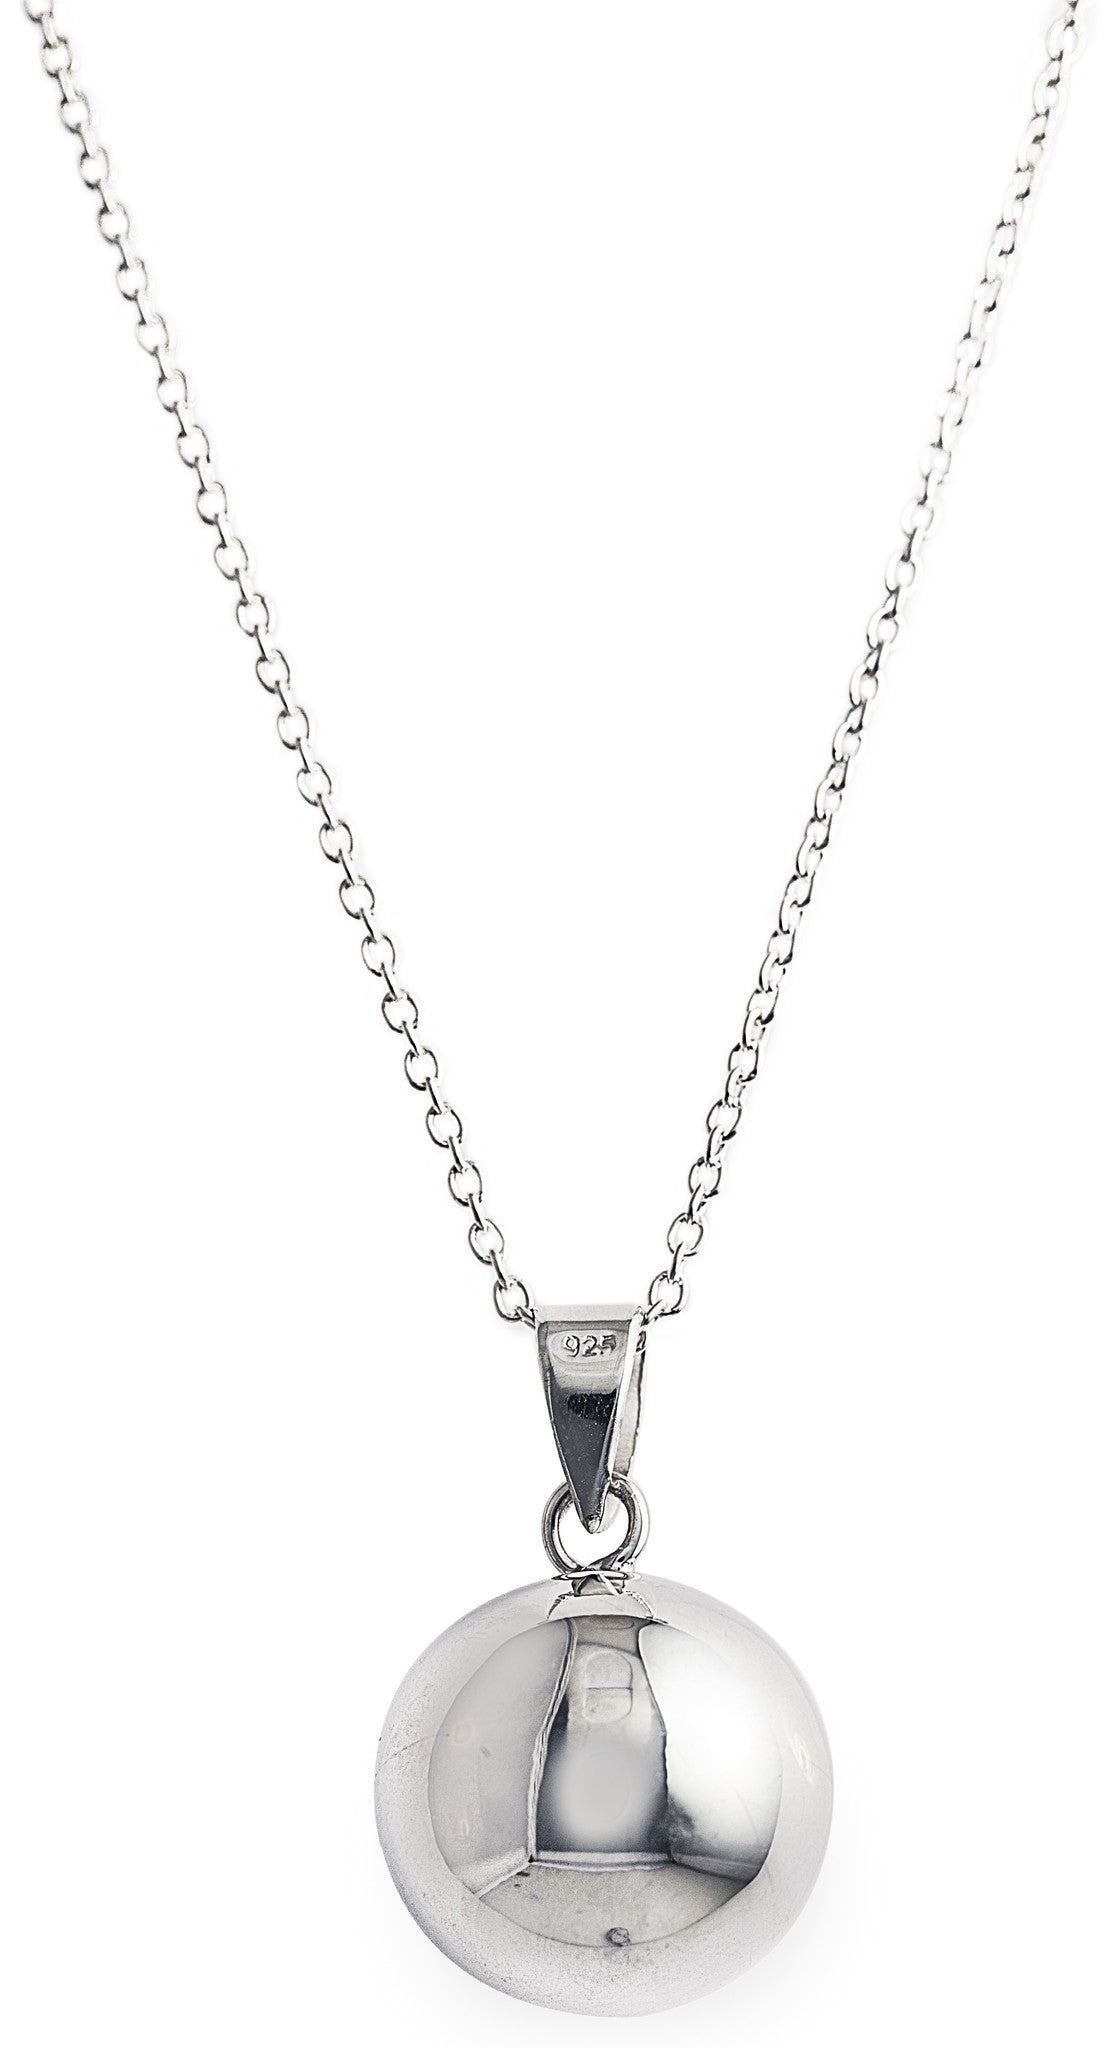 Medium Villa Necklace - 925 Sterling Silver Ball Pendant. Worldwide Shipping. Jewellery by Bellagio & Co